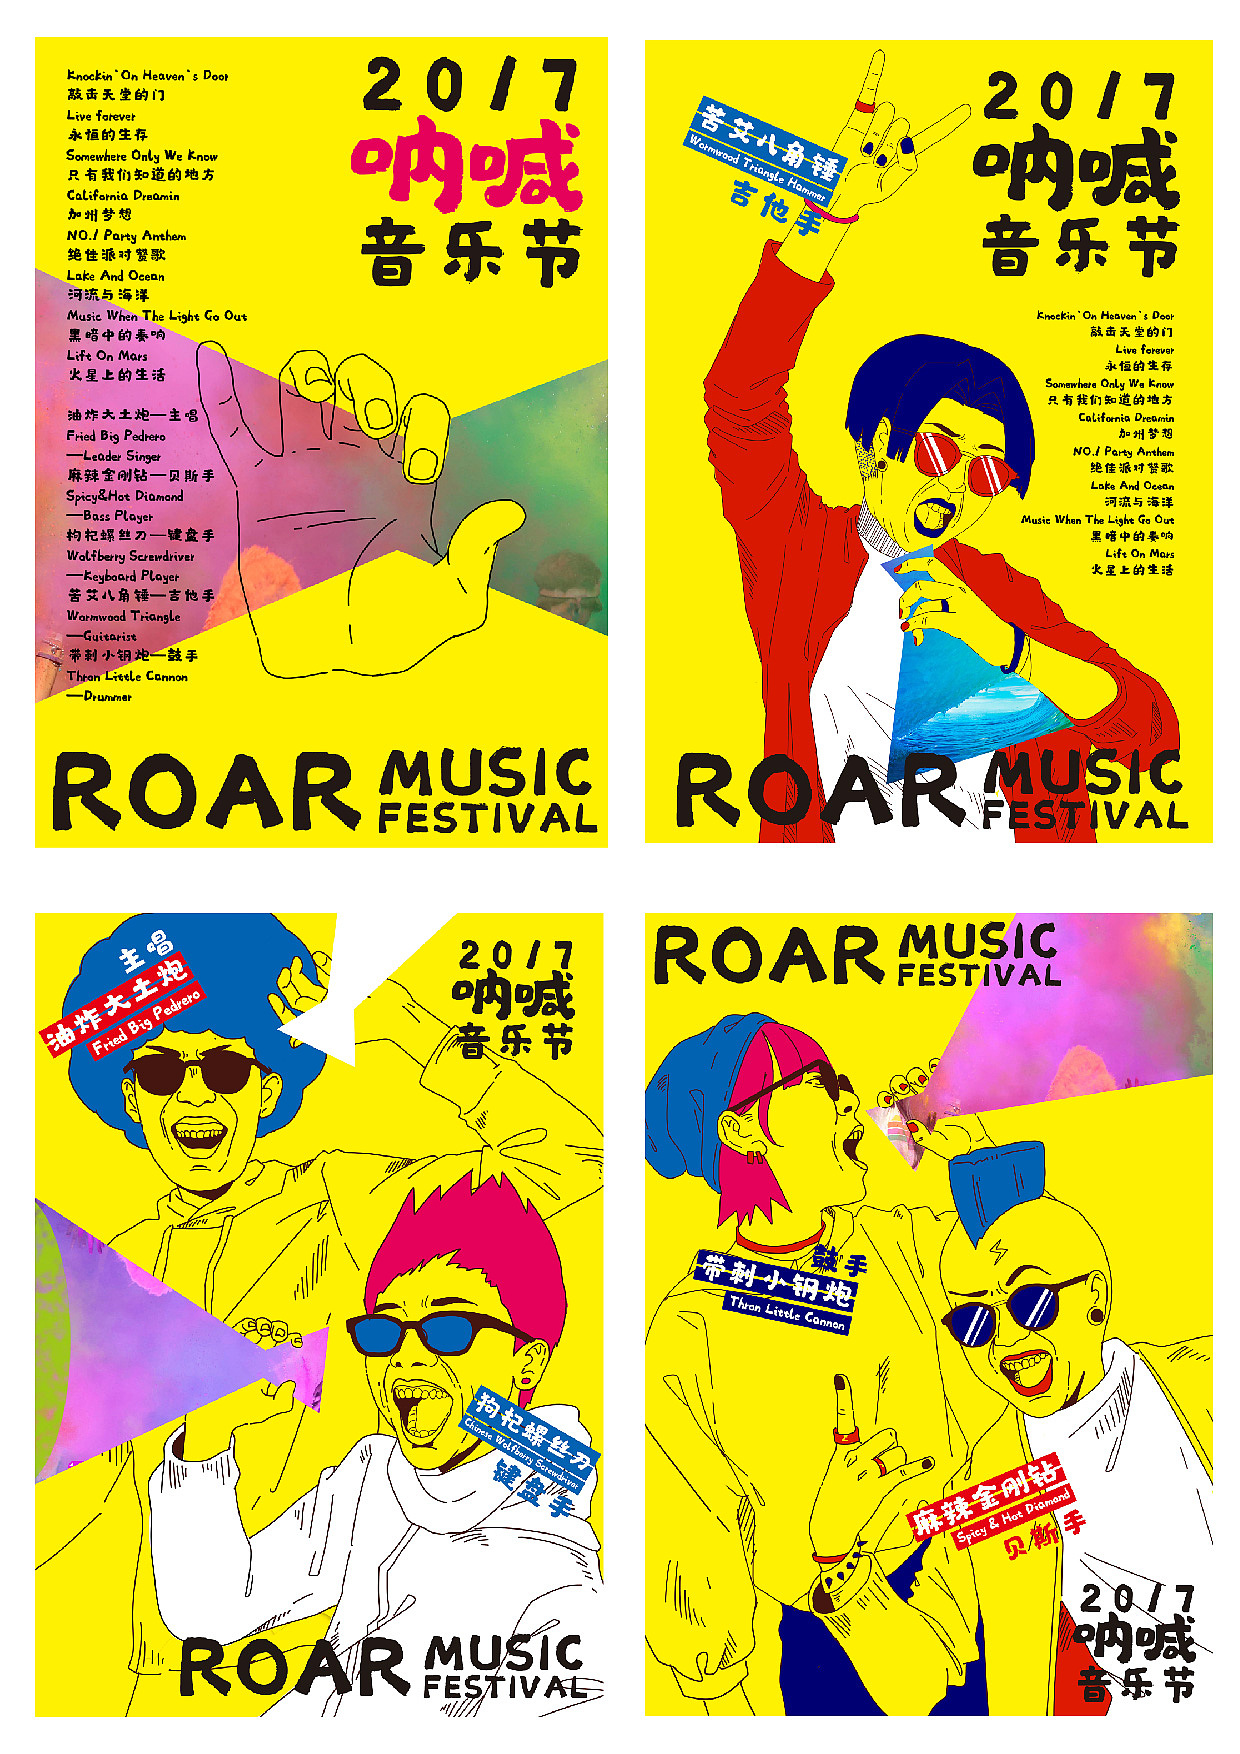 呐喊音乐节『ROAR MUSIC FESTIVAL』